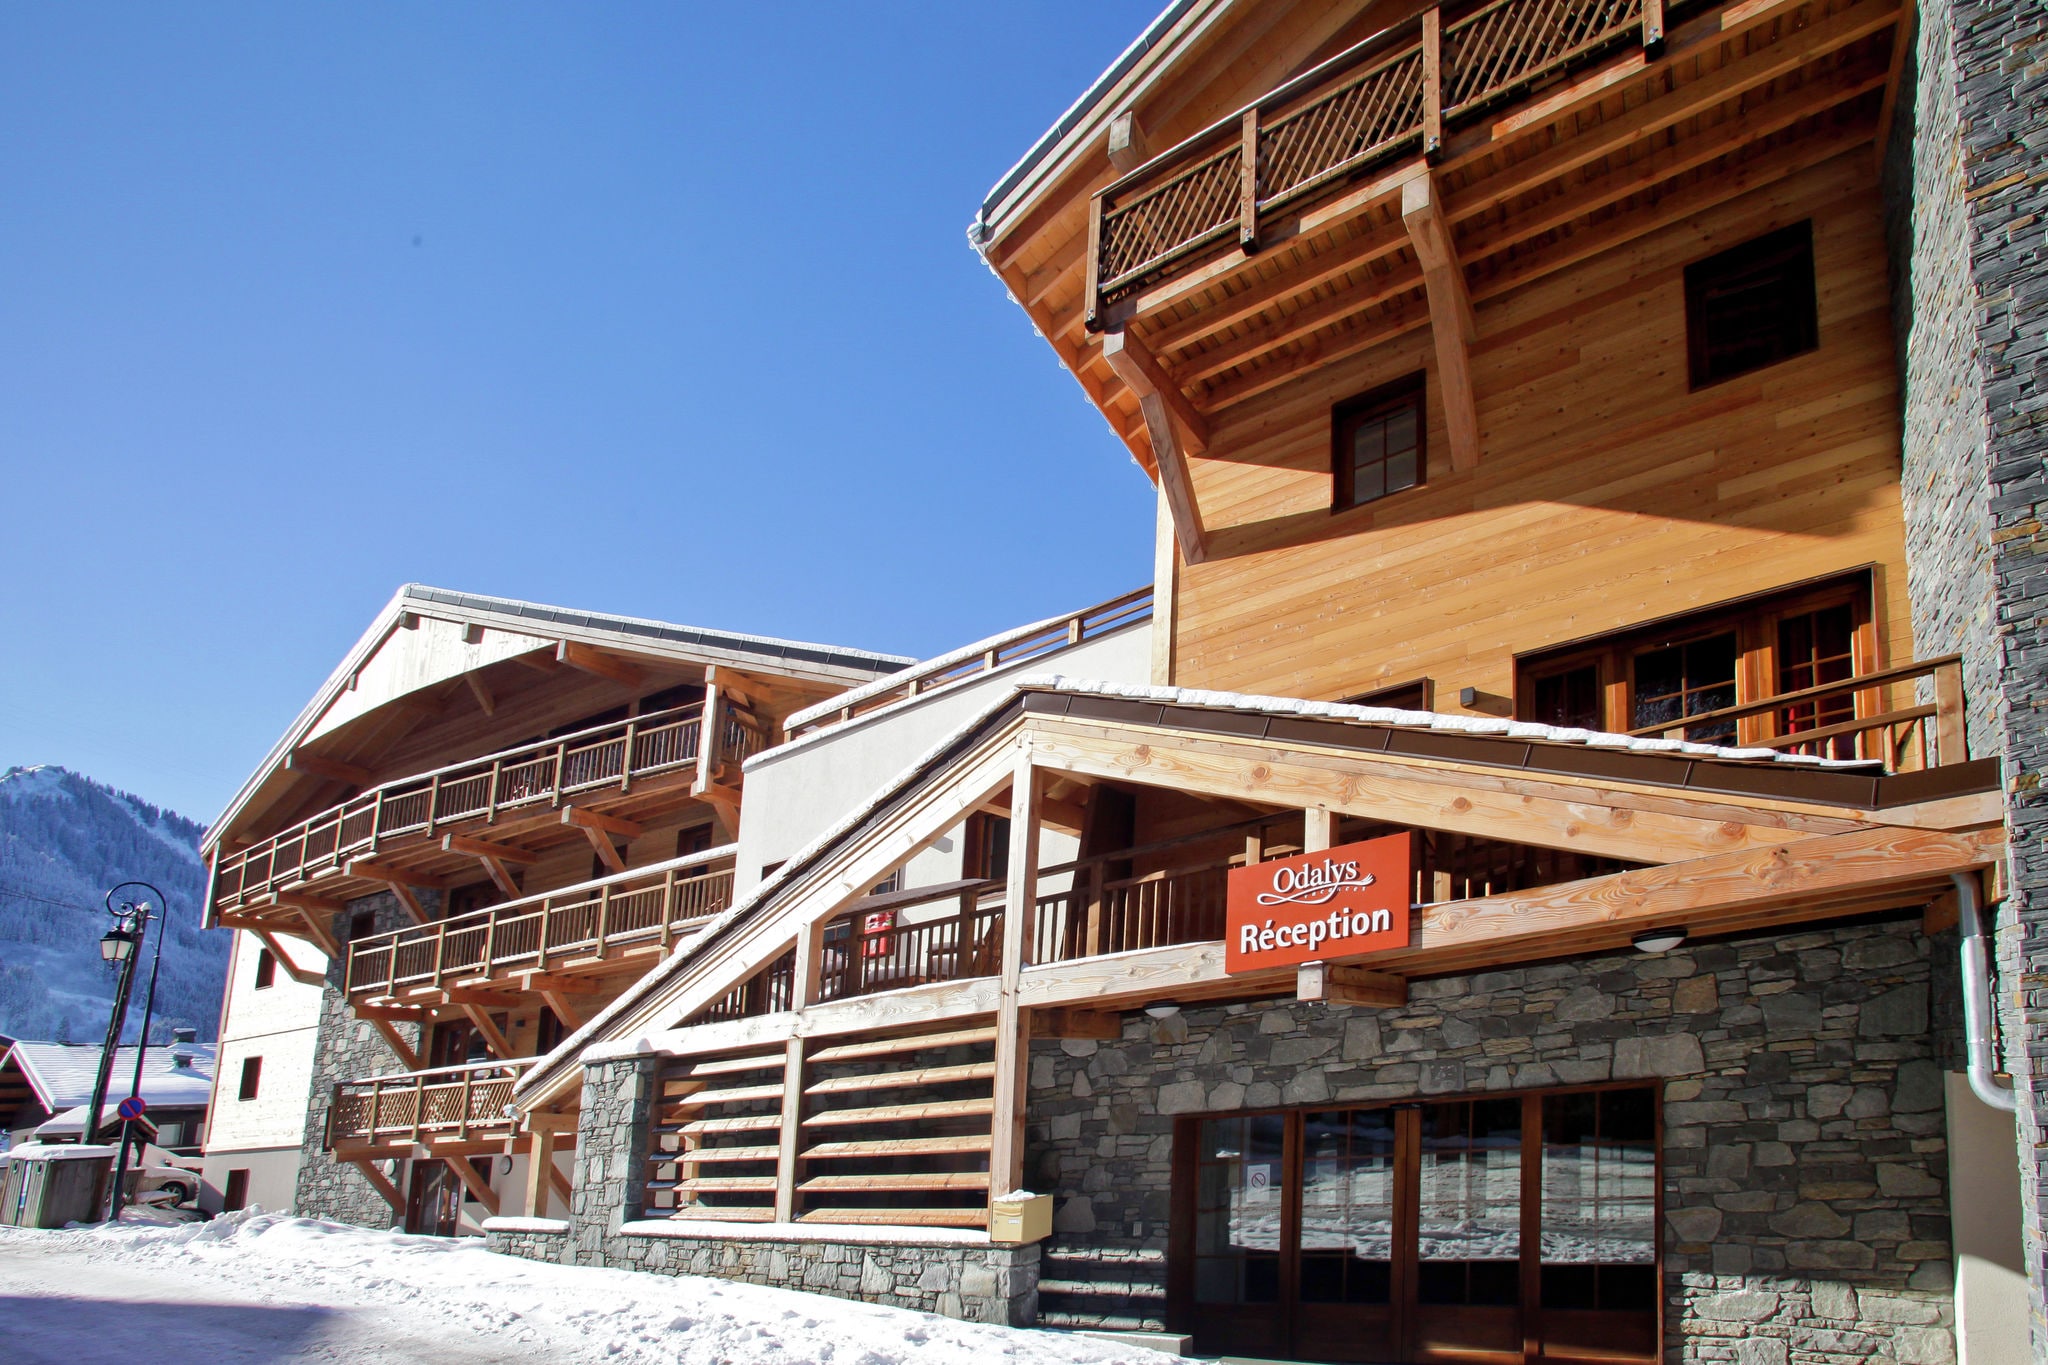 Comfortabel appartement in hartje Chatel op 50 m van skilift